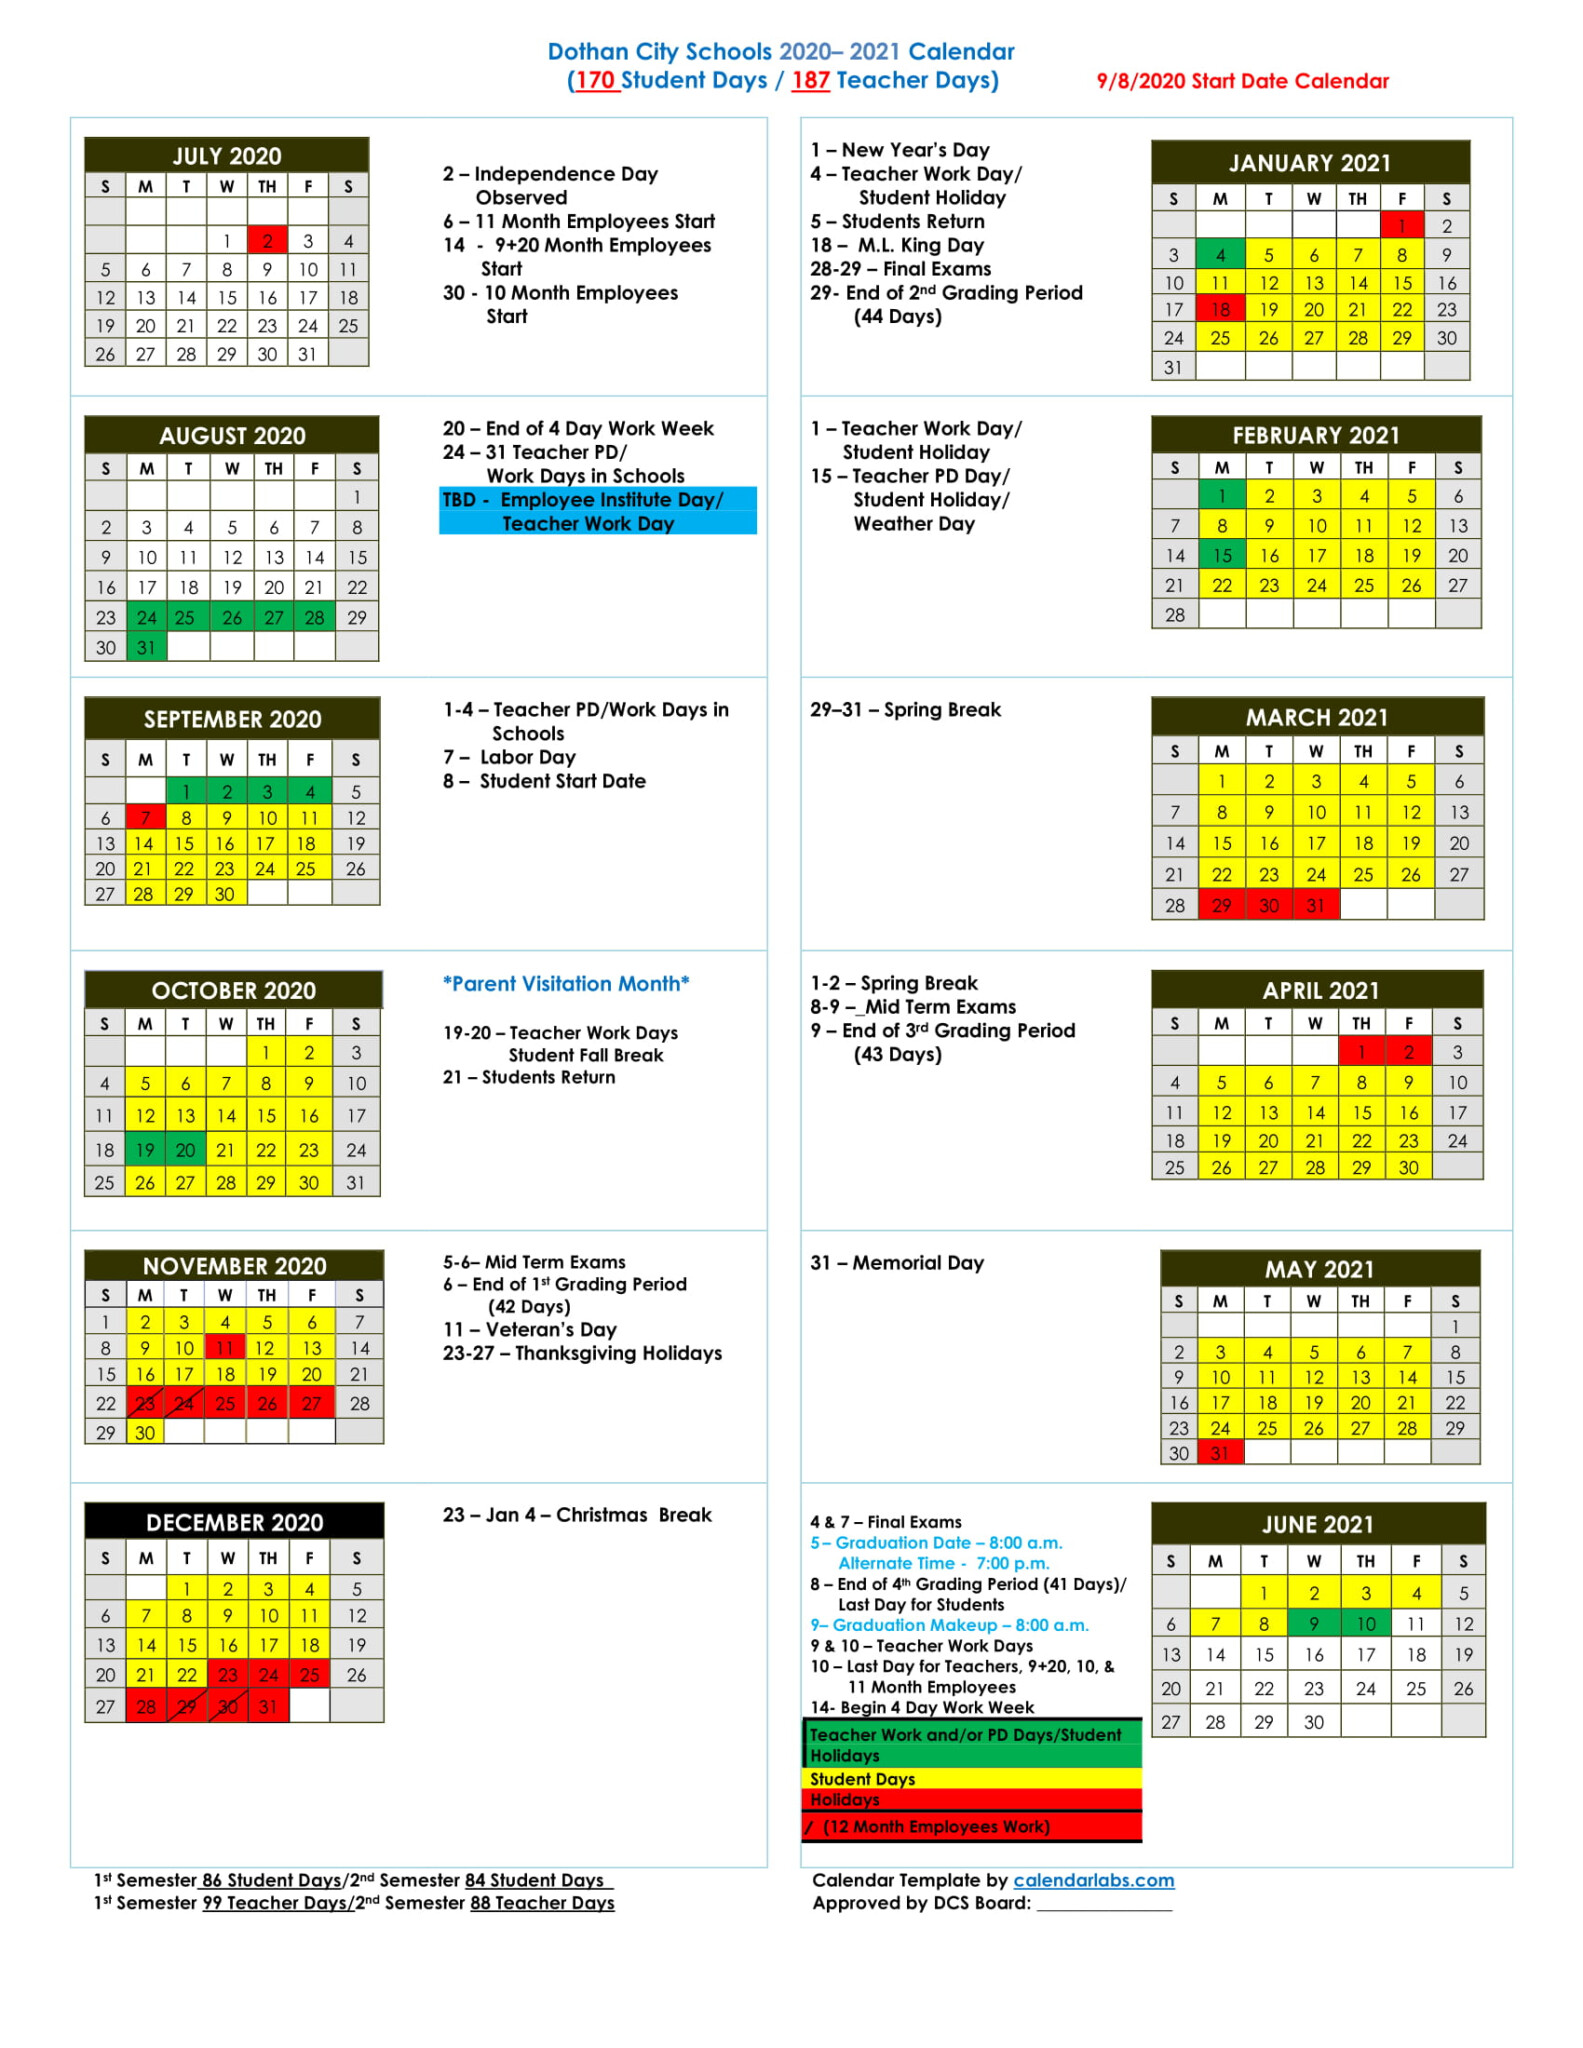 Purdue University Spring 2023 Calendar